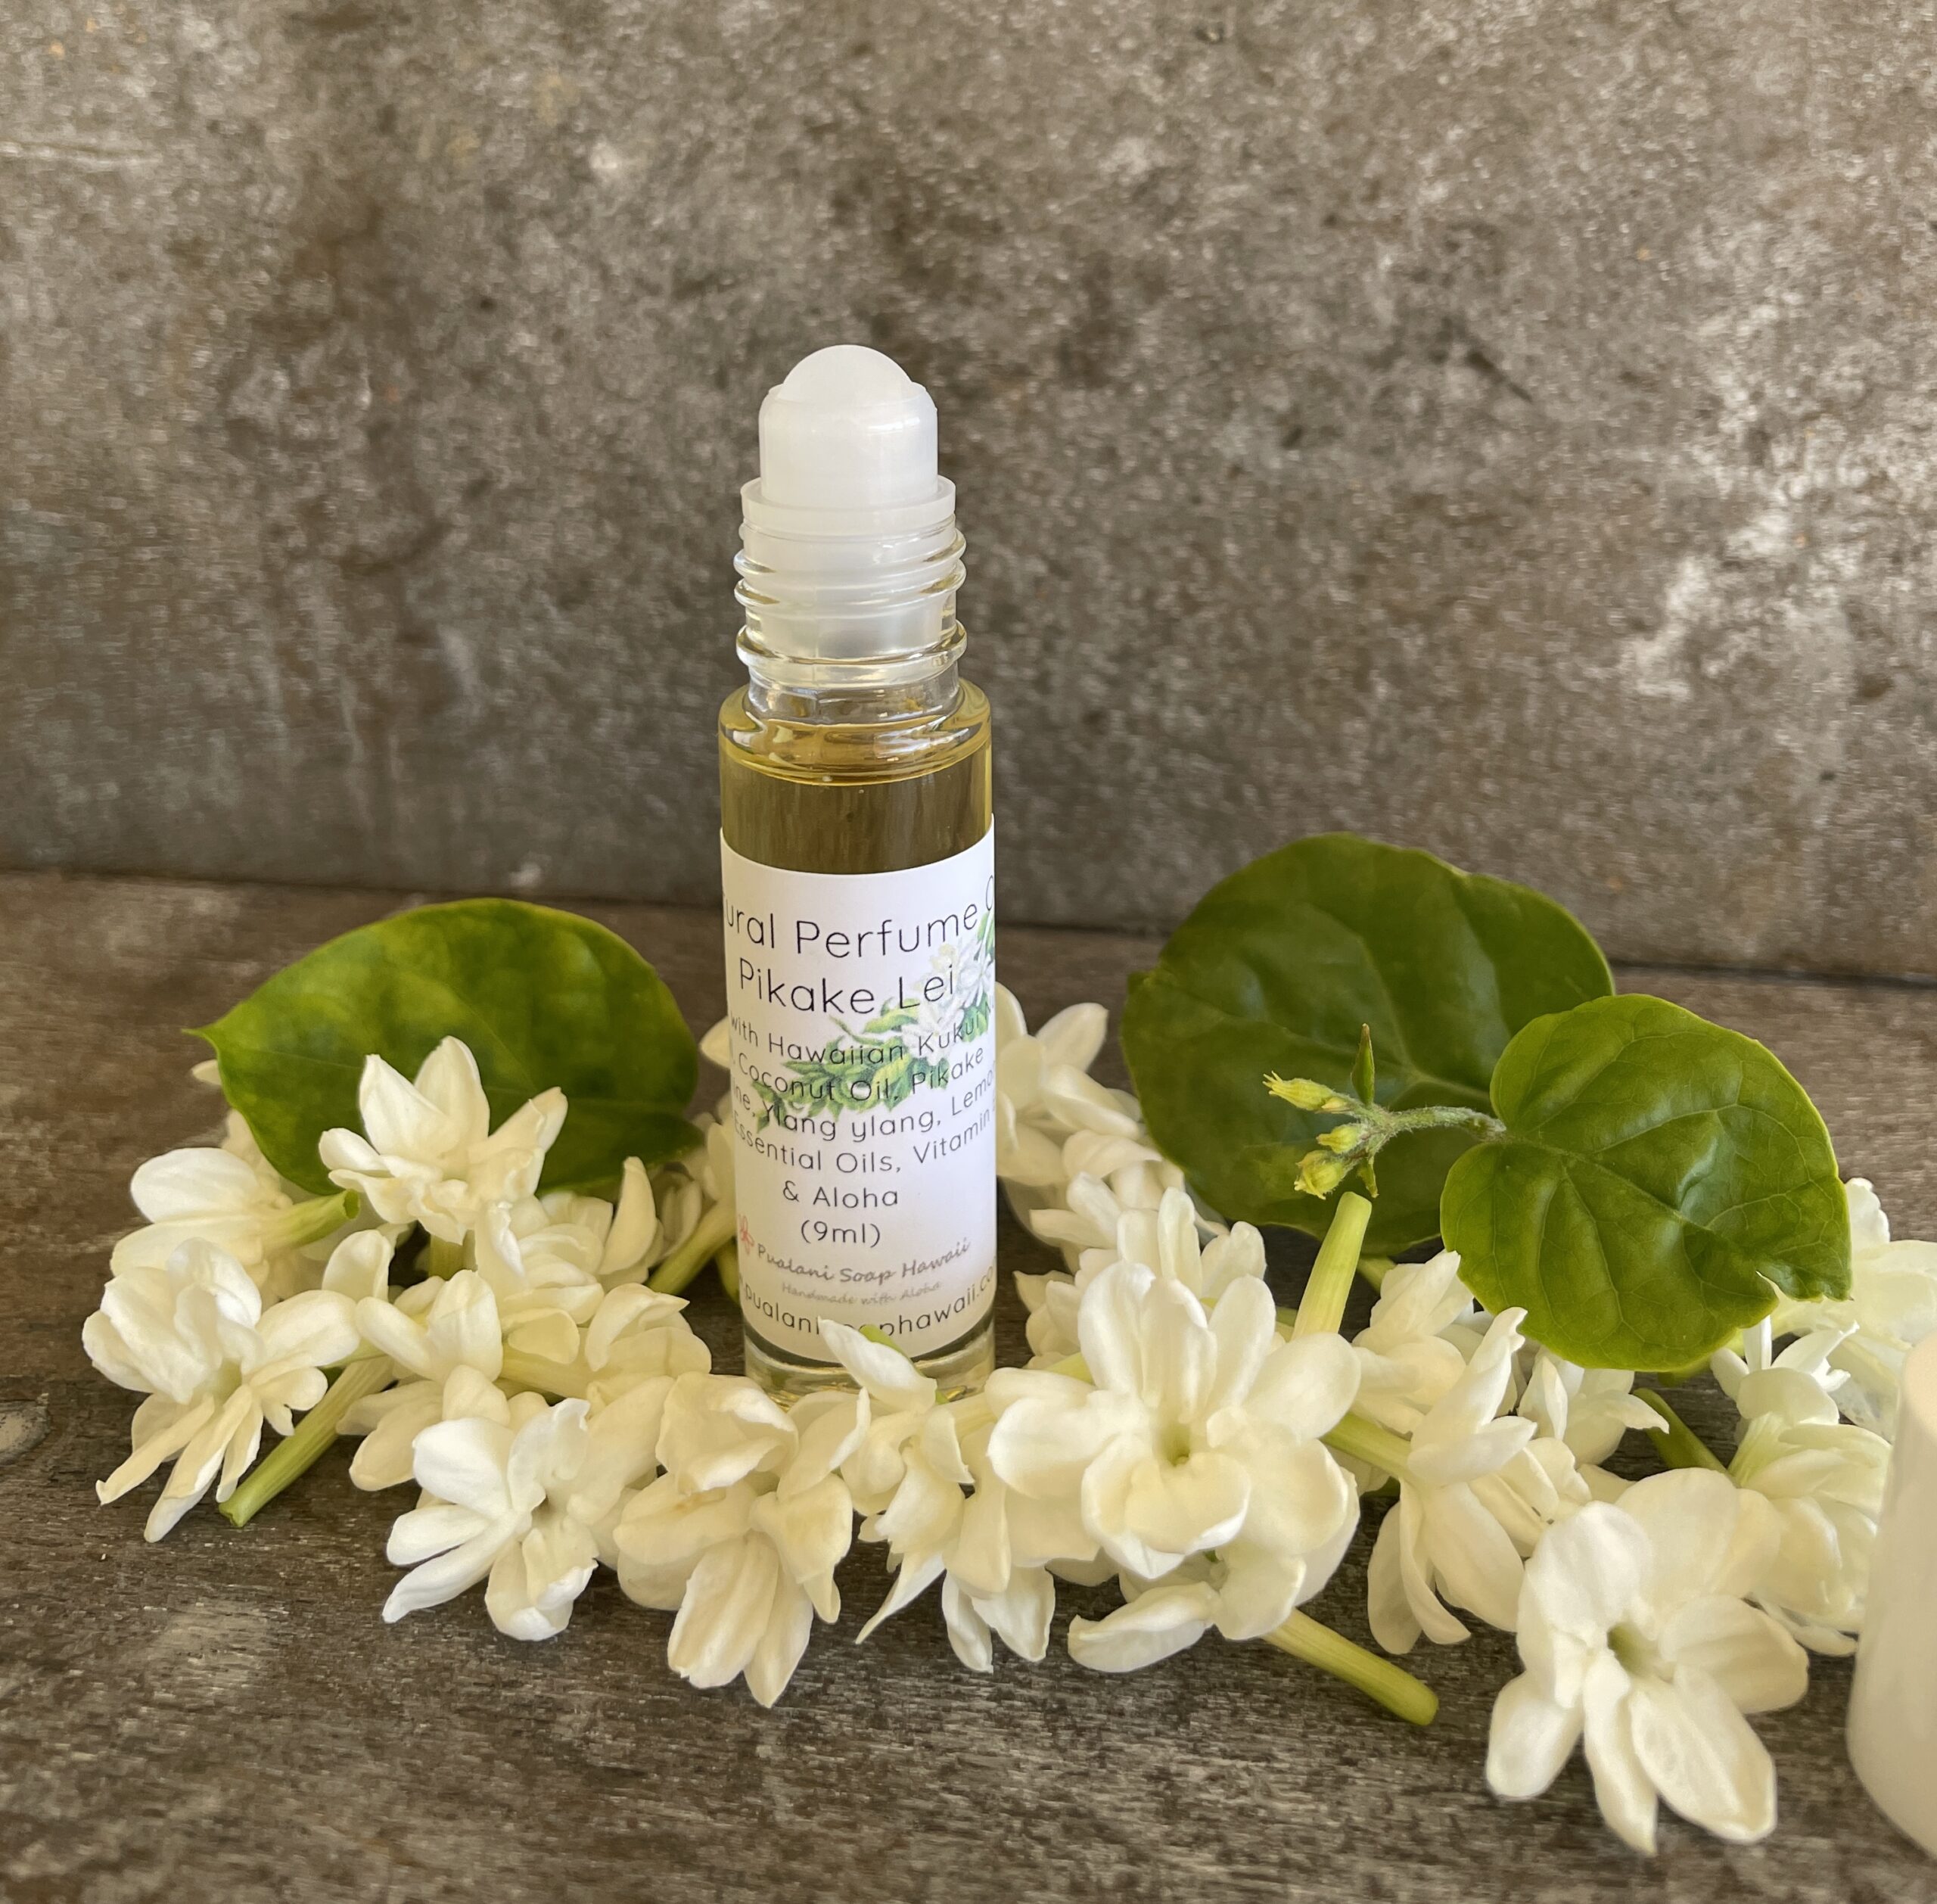 Pikake Lei (Hawaiian Jasmine) Natural Perfume Oil 9ml roll-on bottle ...